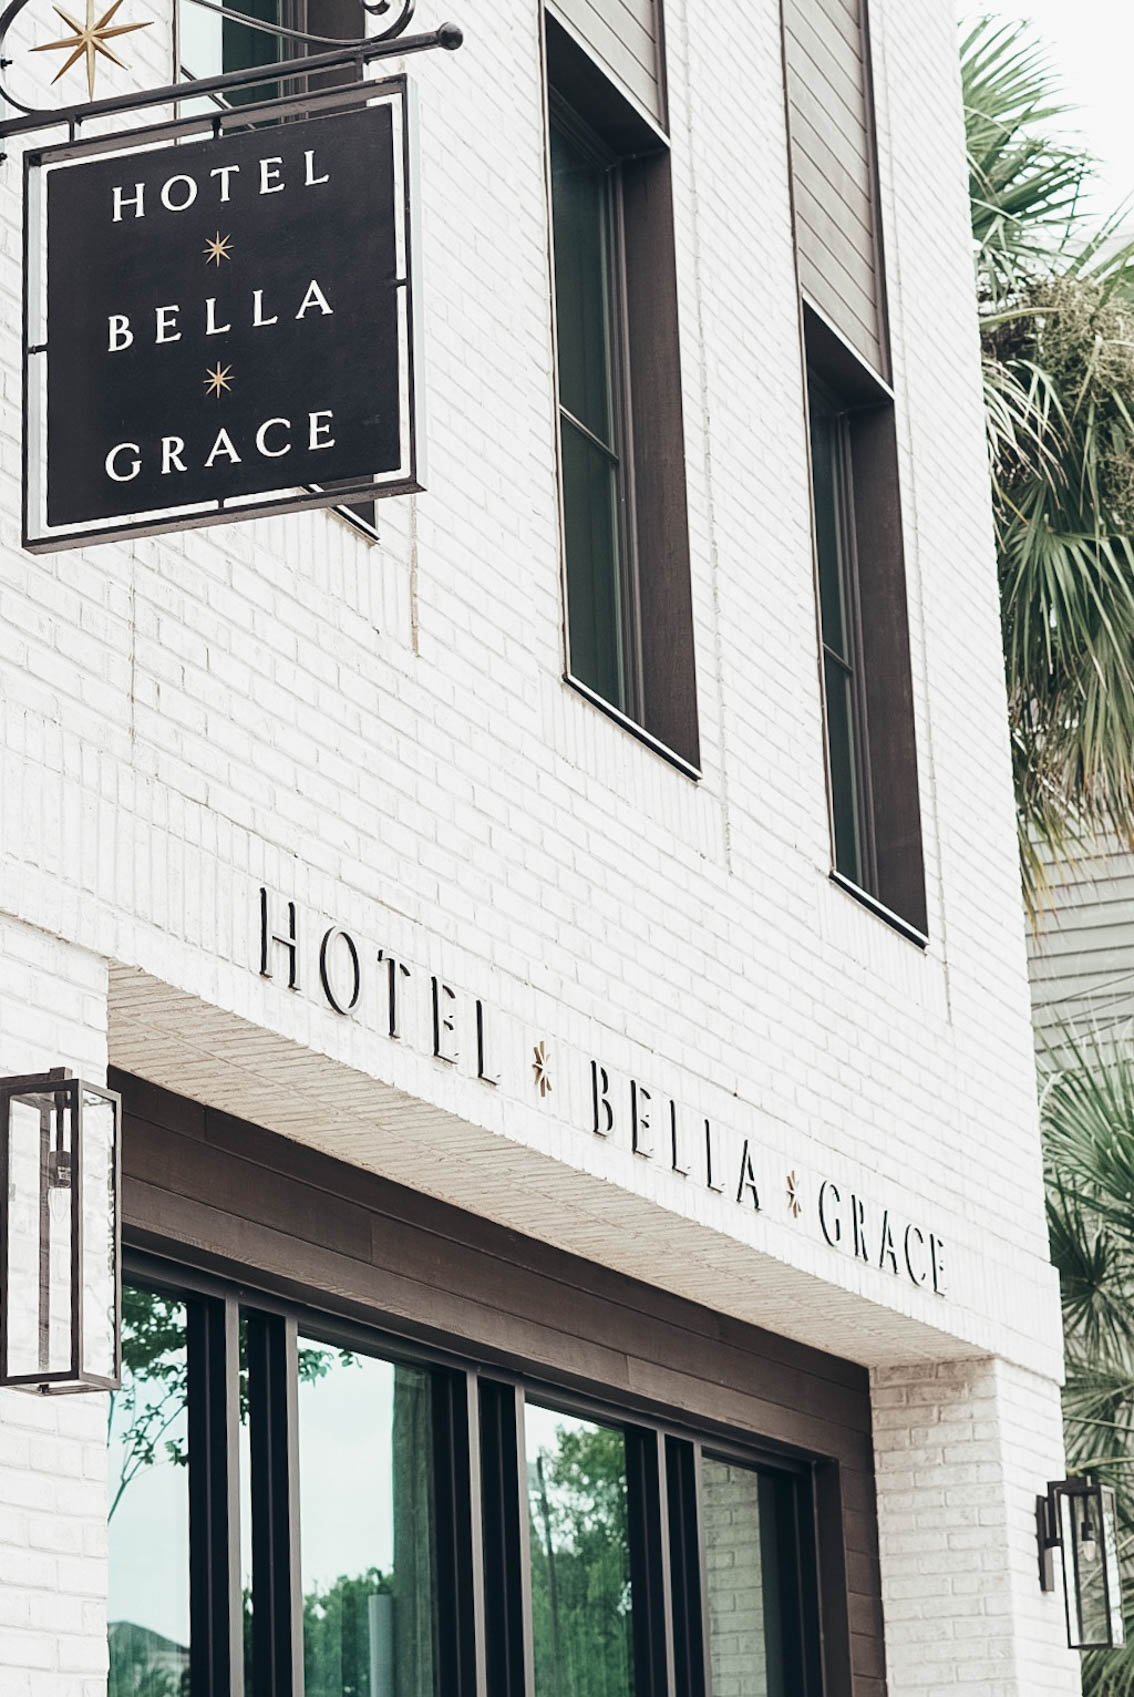 hotel Bella grace Charleston South Carolina 